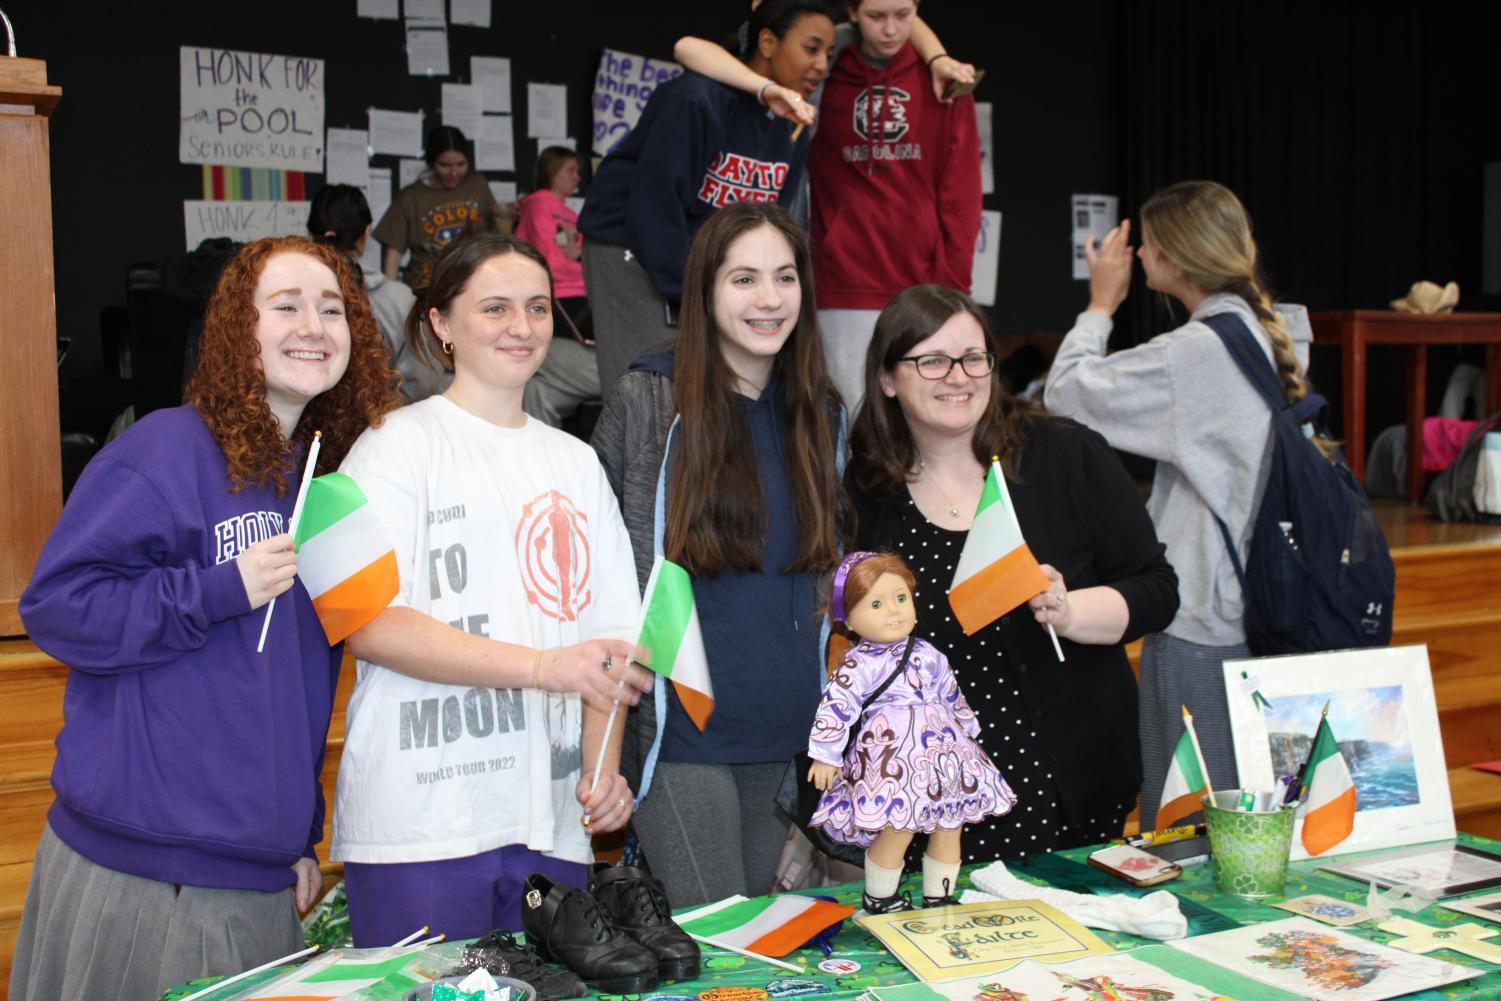 Students and teacher pose at the Irish exhibit.